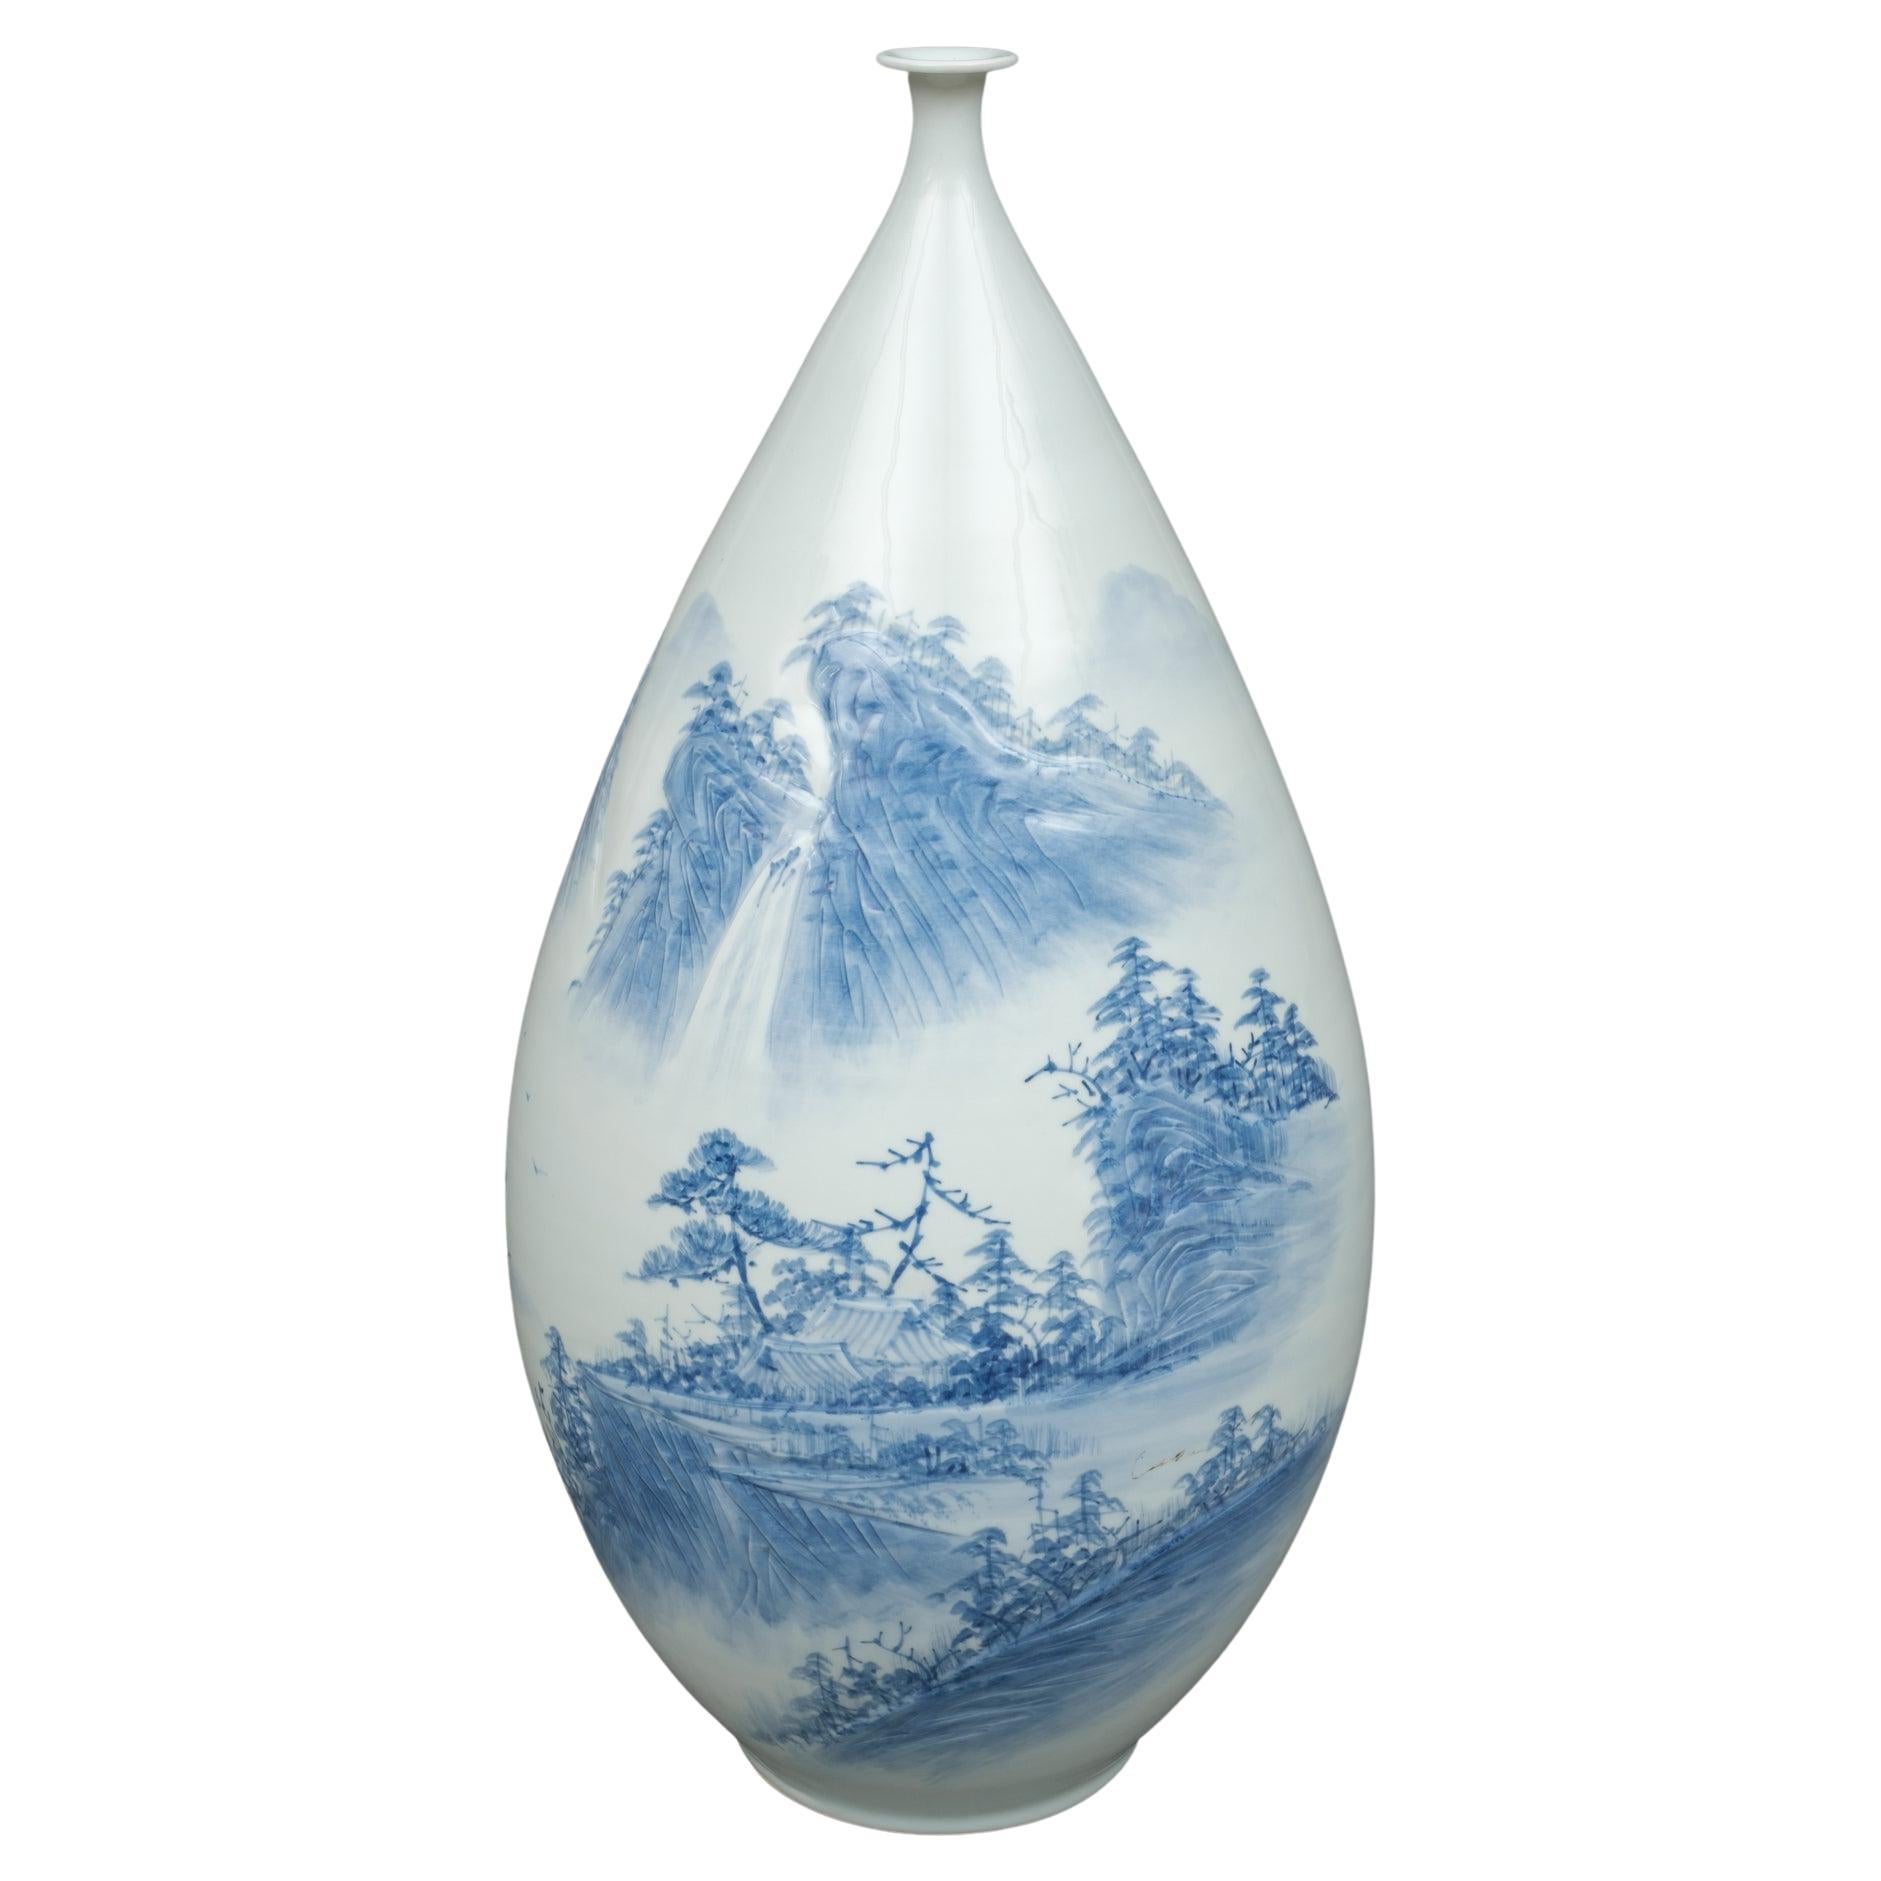 Large Japanese Ovoid Porcelain Vase with Blue & White Landscape, by Shigan 芝岩 For Sale